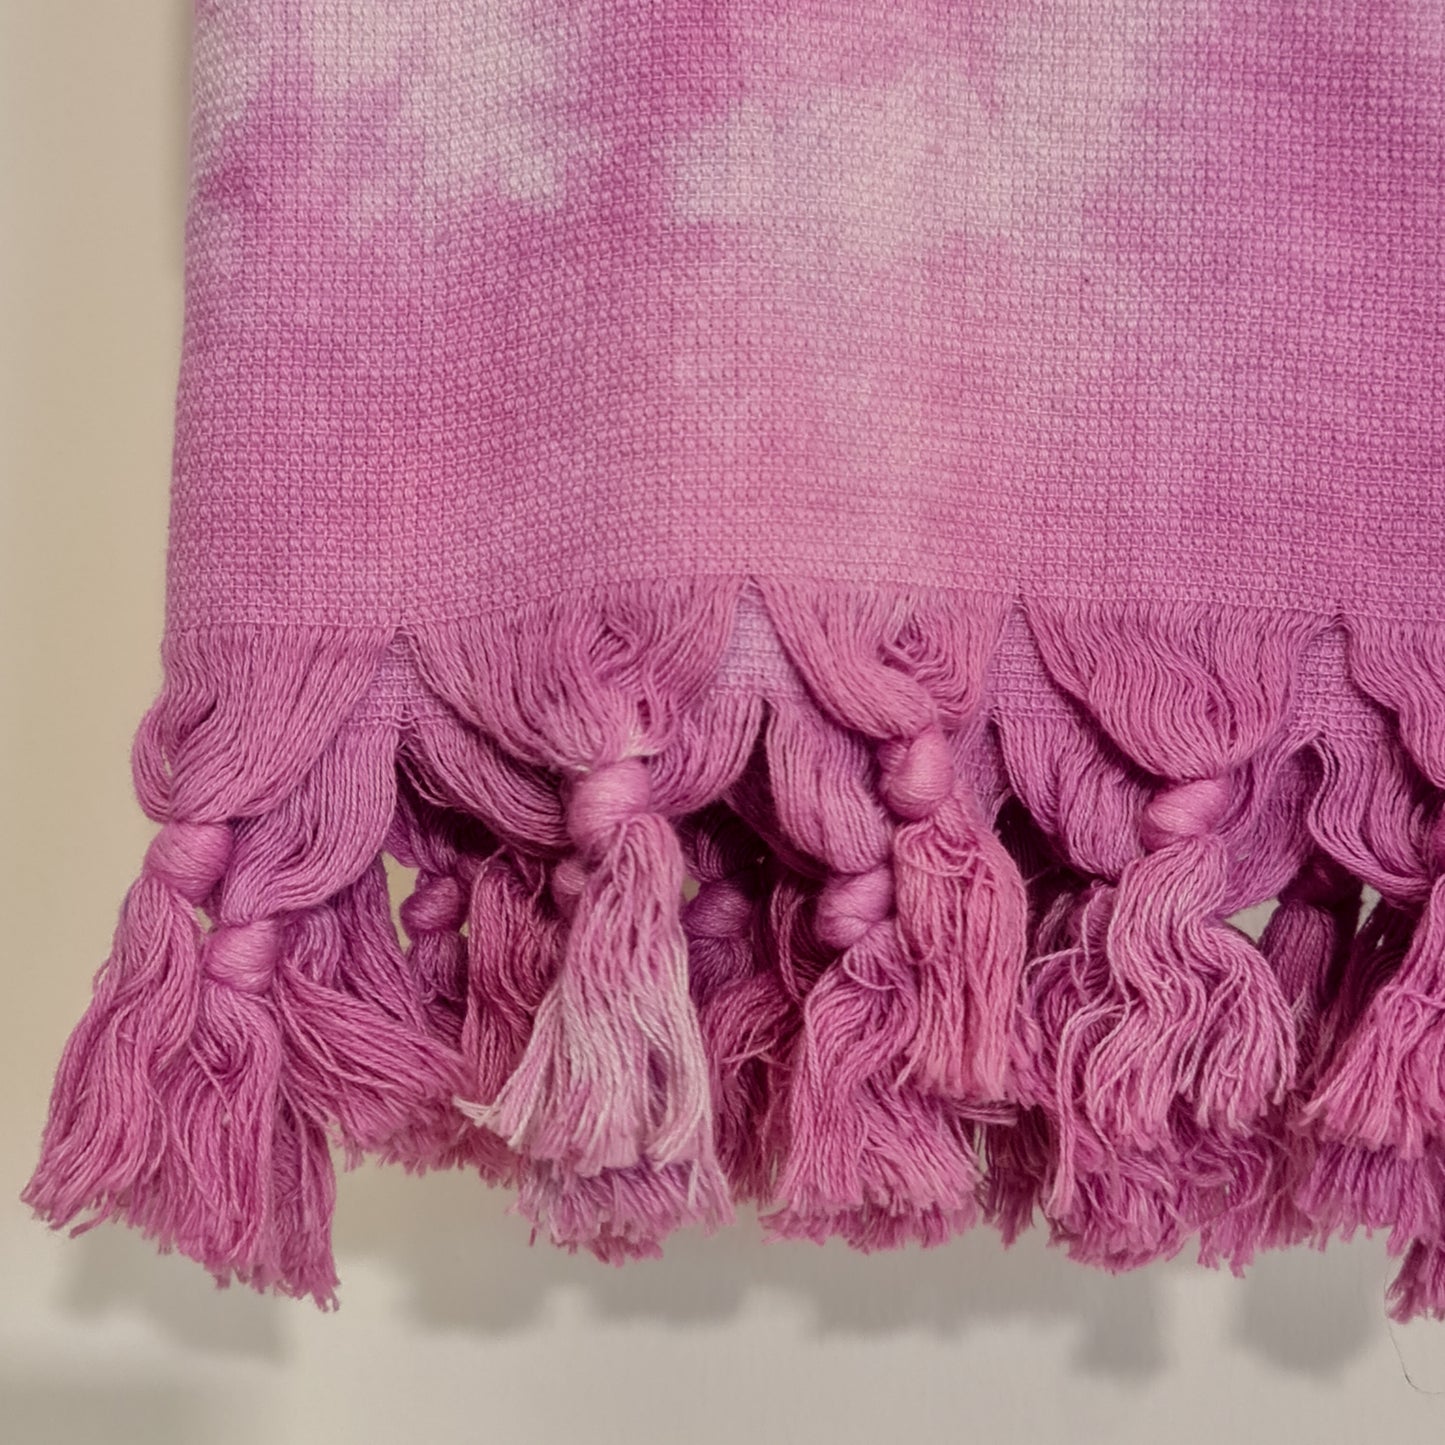 Turkish Terry Cotton Bath Towel Tie-Dye Purple